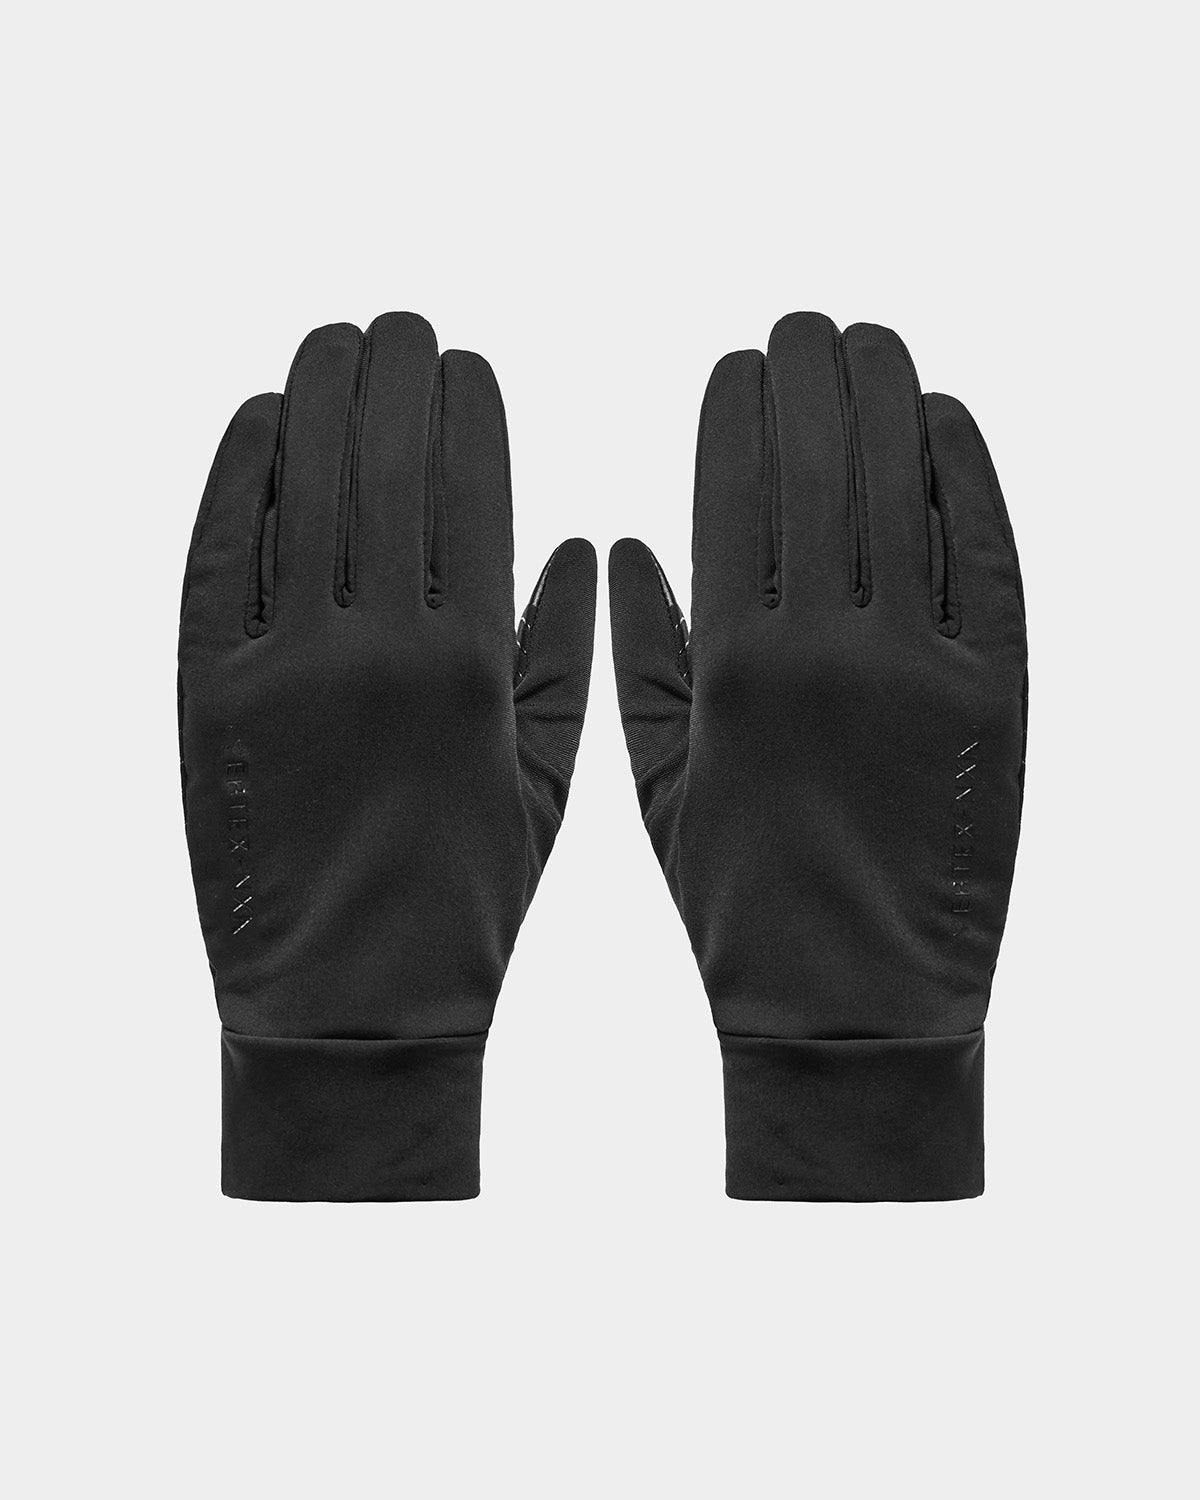 Vertex-NXL - Stretch Liner Gloves - Black "dimito vertex-nxl" "vertex-nxl stockists" "vertex nil"